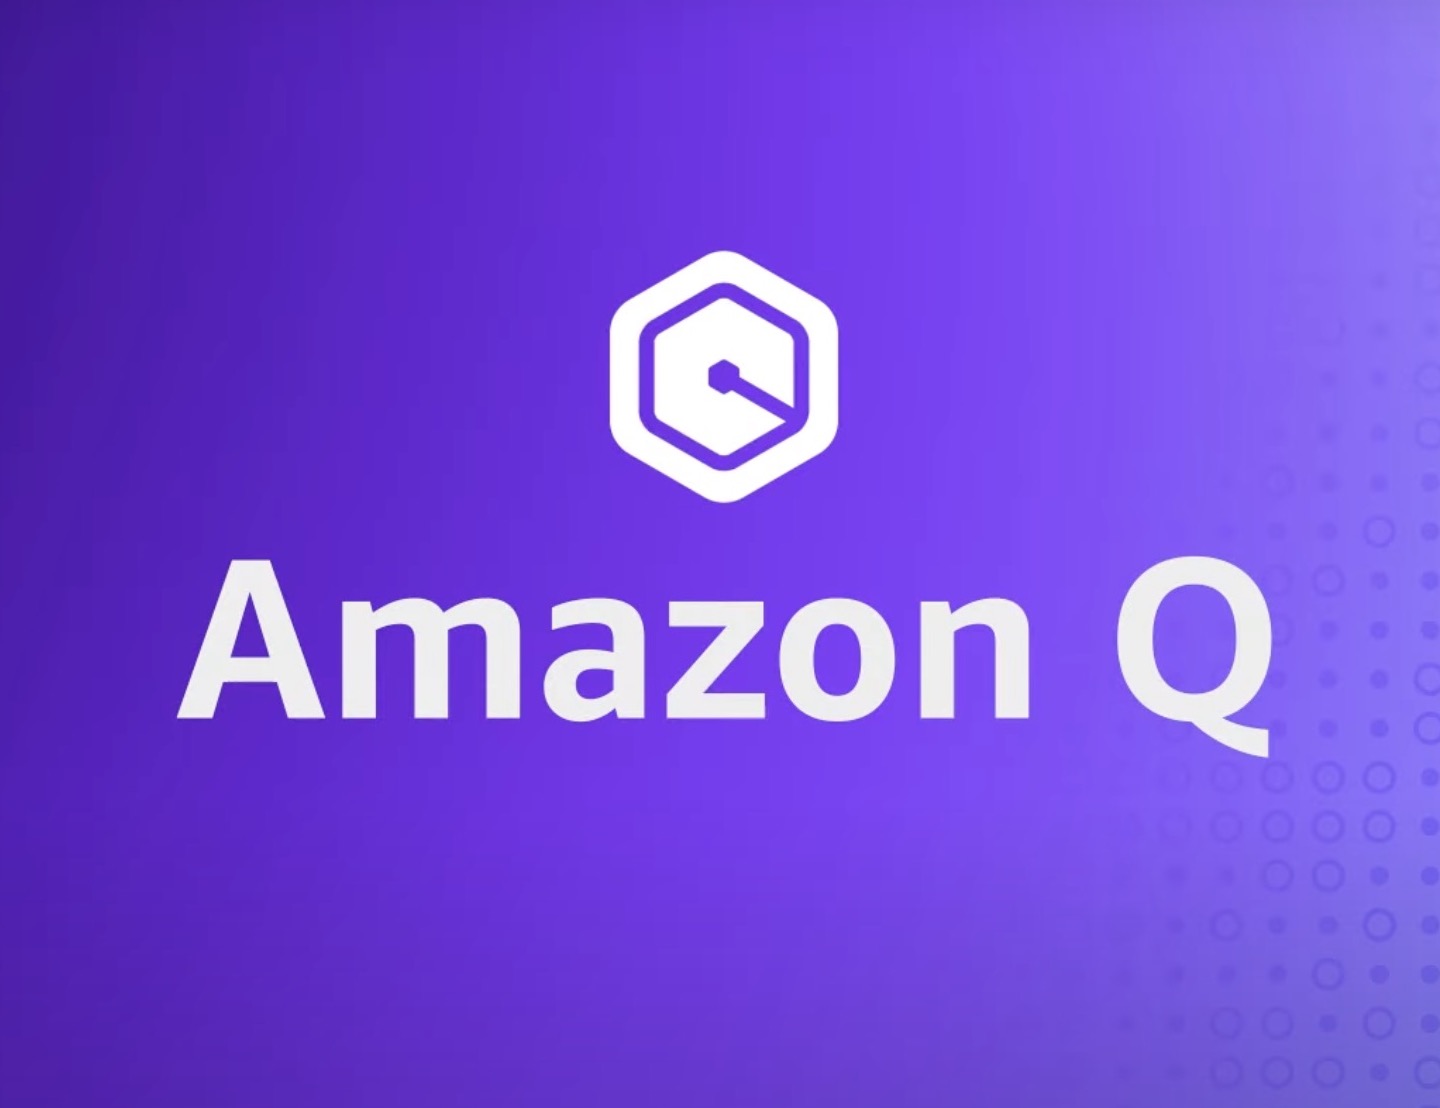 Amazon Q logo